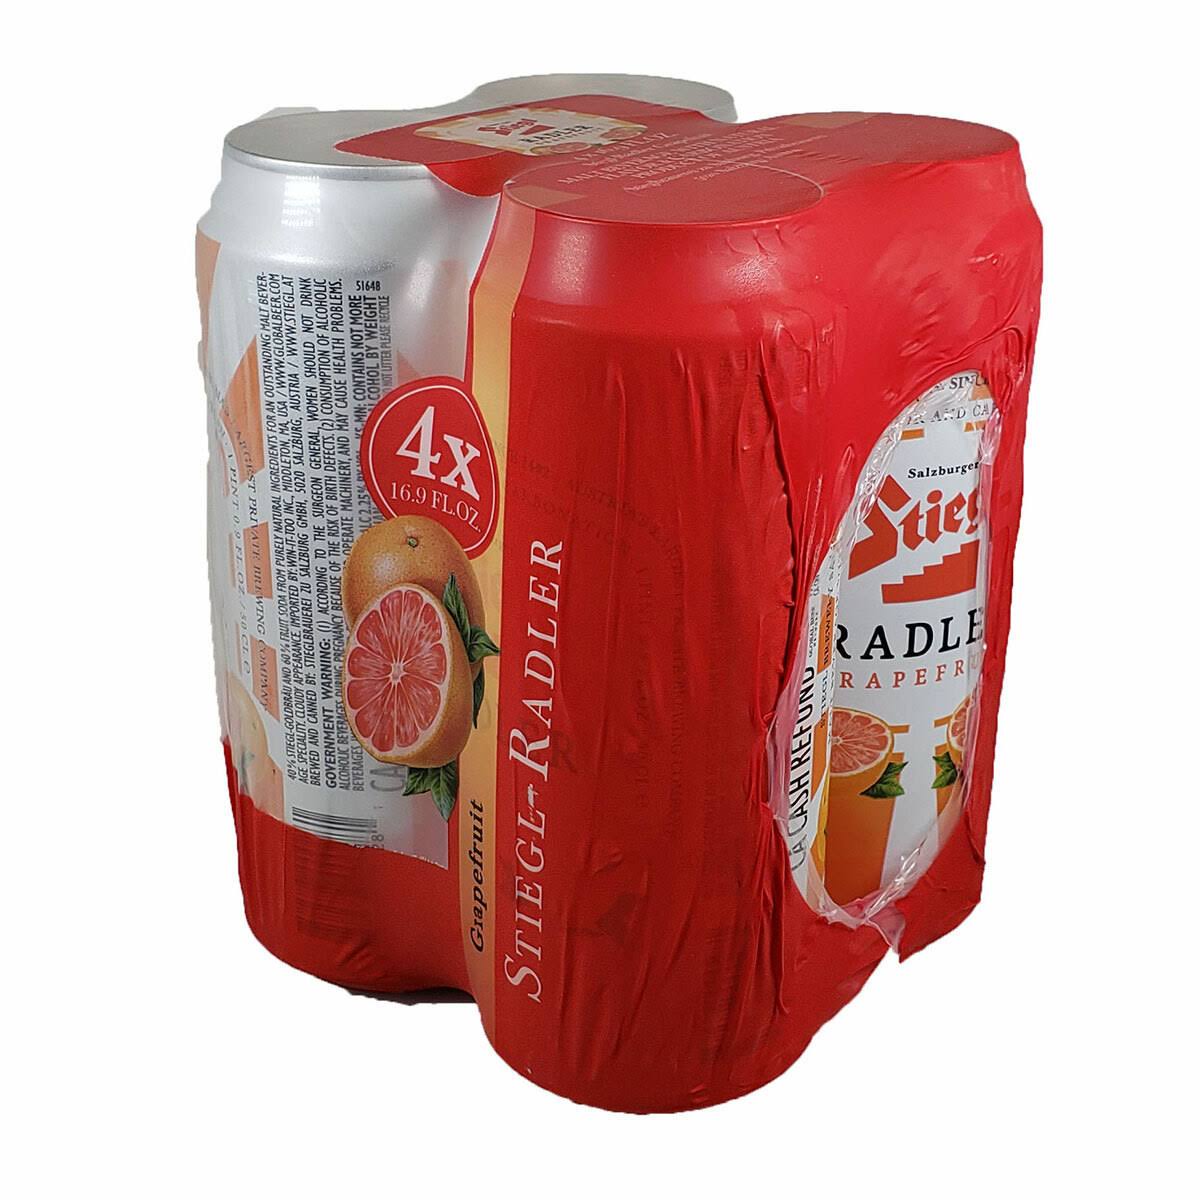 Stiegl Grapefruit Radler - 4 pack, 16 fl oz bottles